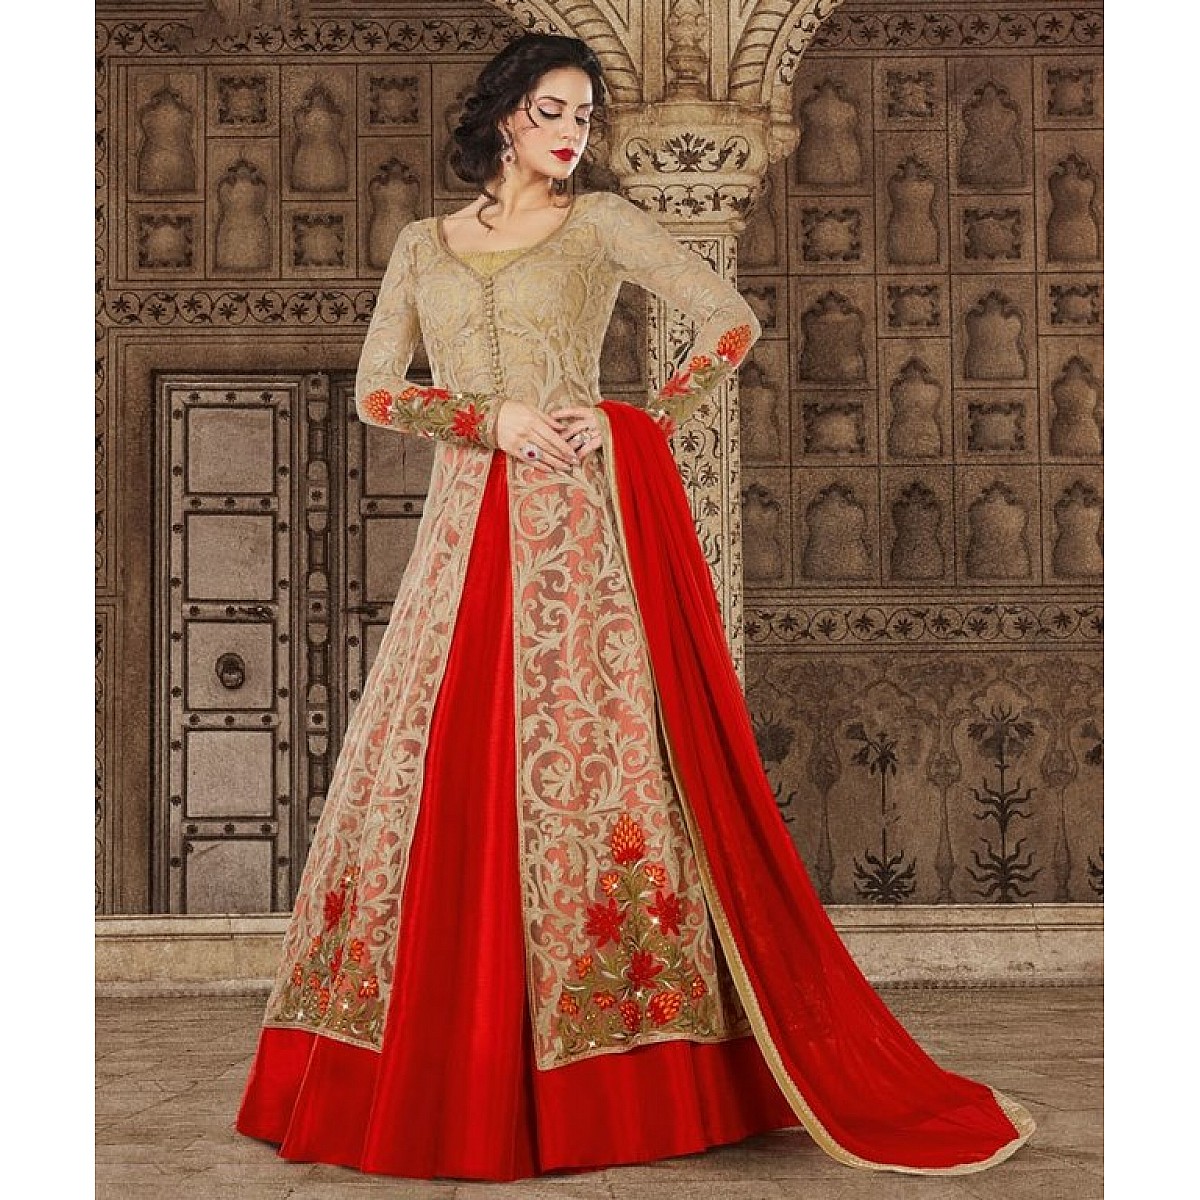 Gown : Beige Colored Art Silk Thread & Jari Embroidery ...